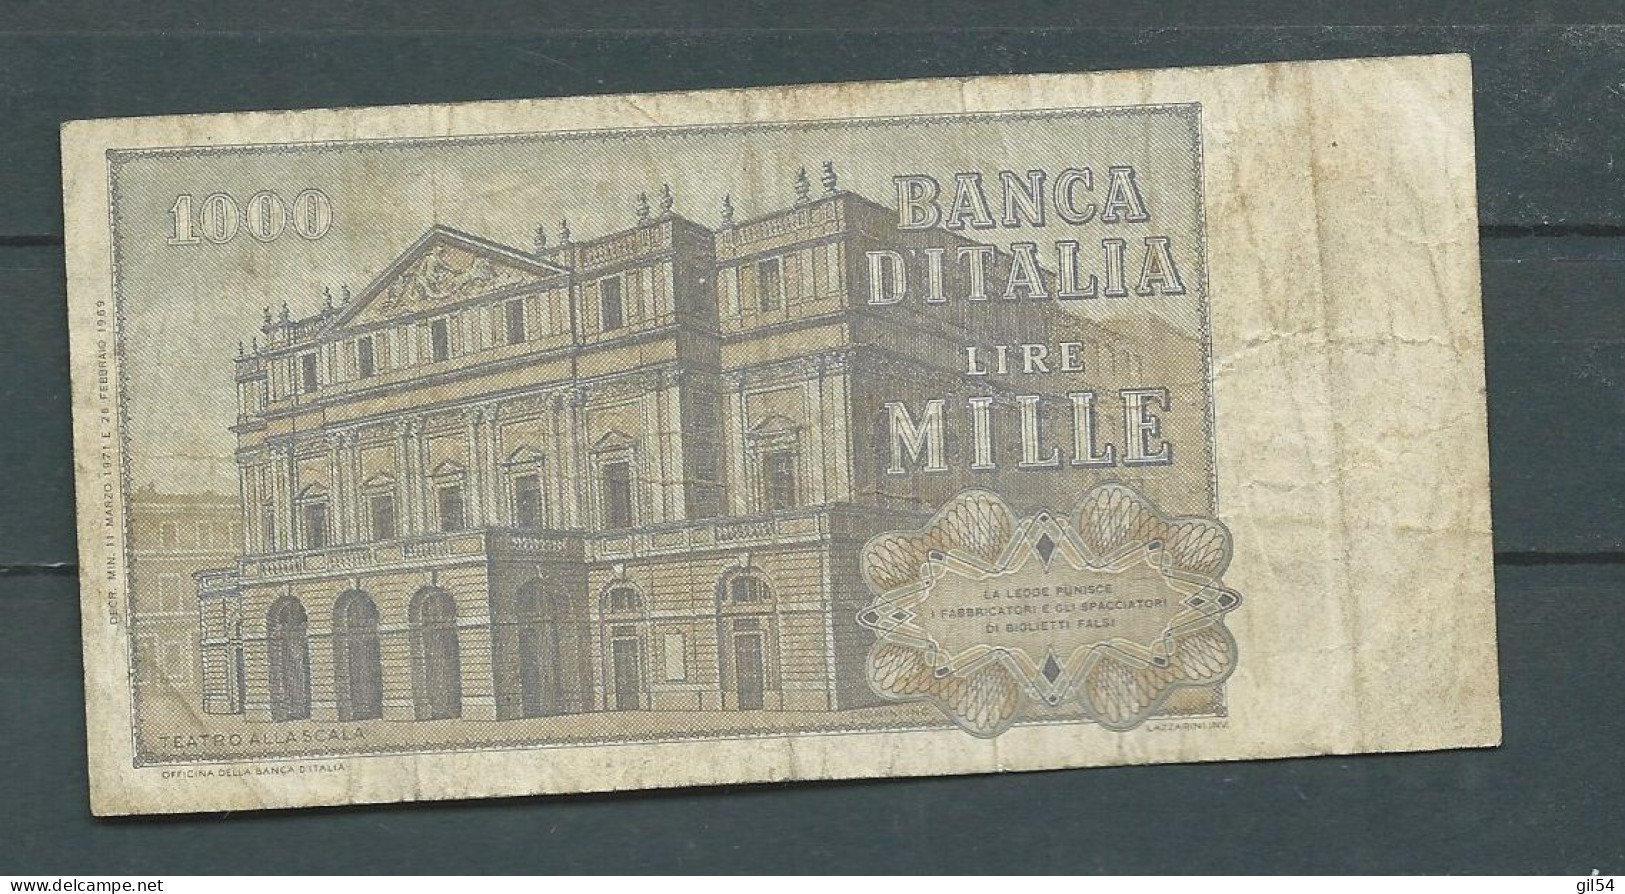 BILLET  Italie - Billet De 1000 Lire - Giuseppe Verdi - 11 Mars 1971  PB598081F - Laura13907 - 1000 Lire